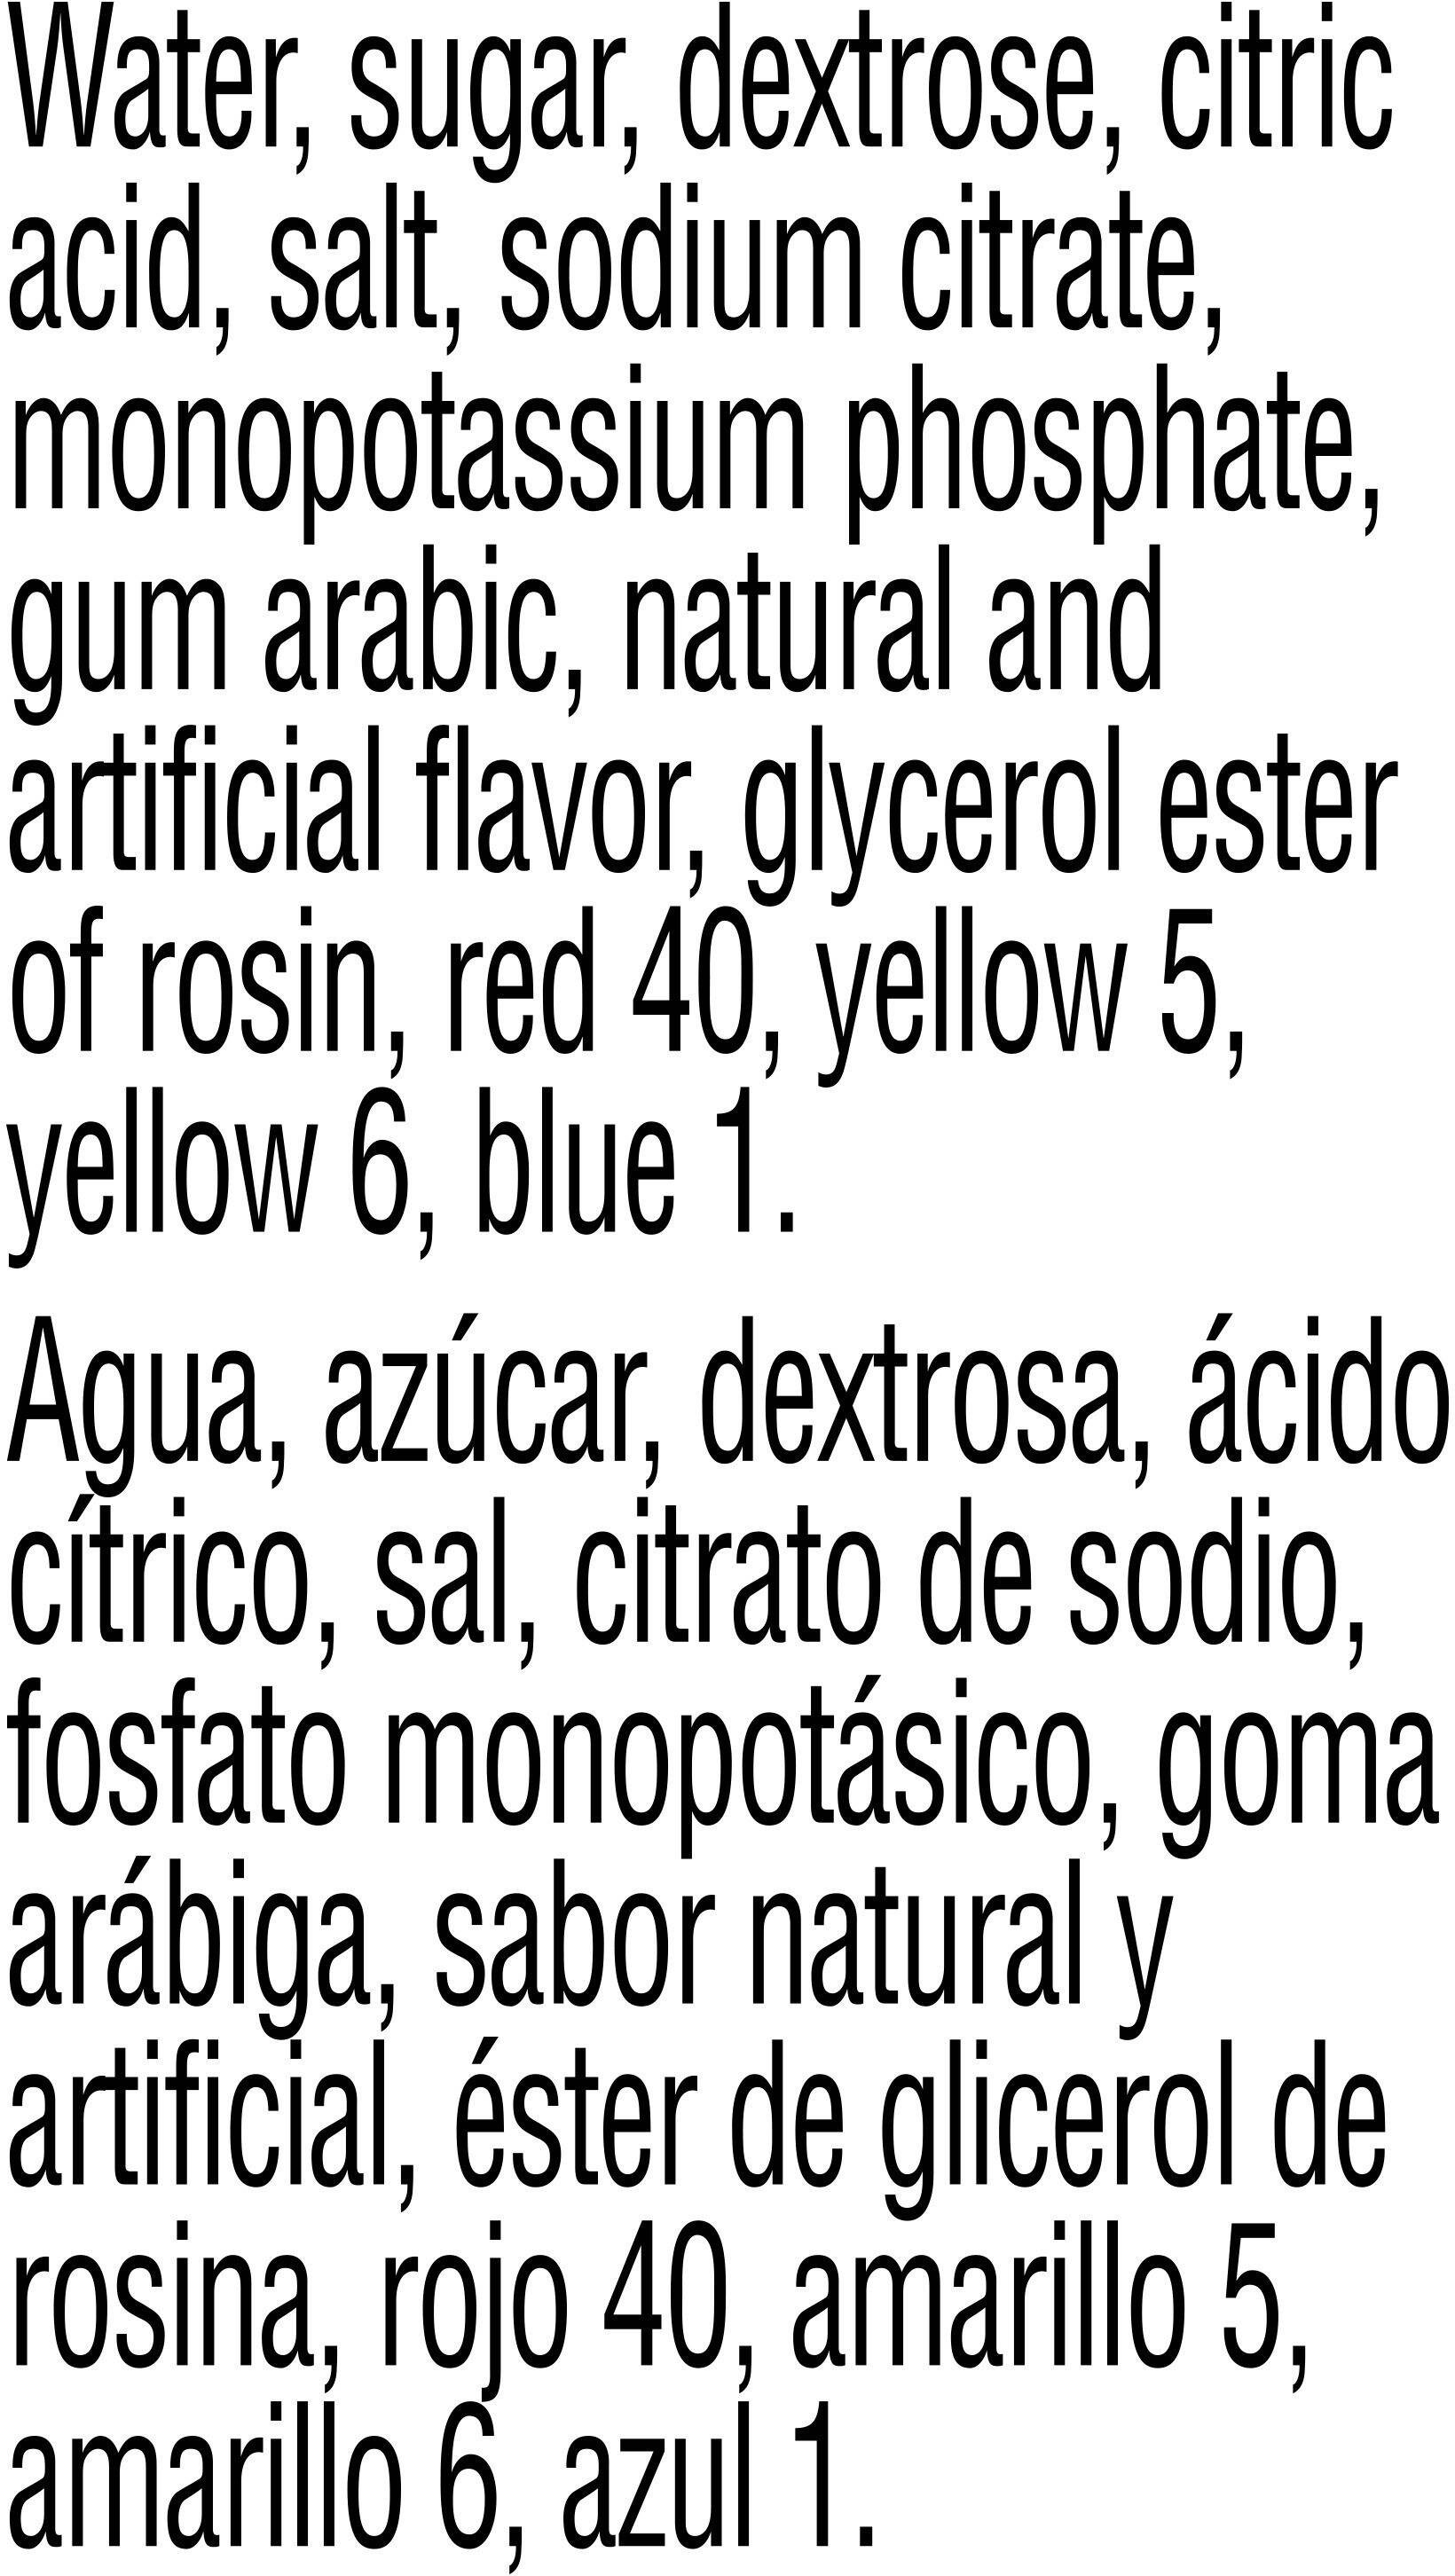 Image describing nutrition information for product Gatorade Watermelon Citrus